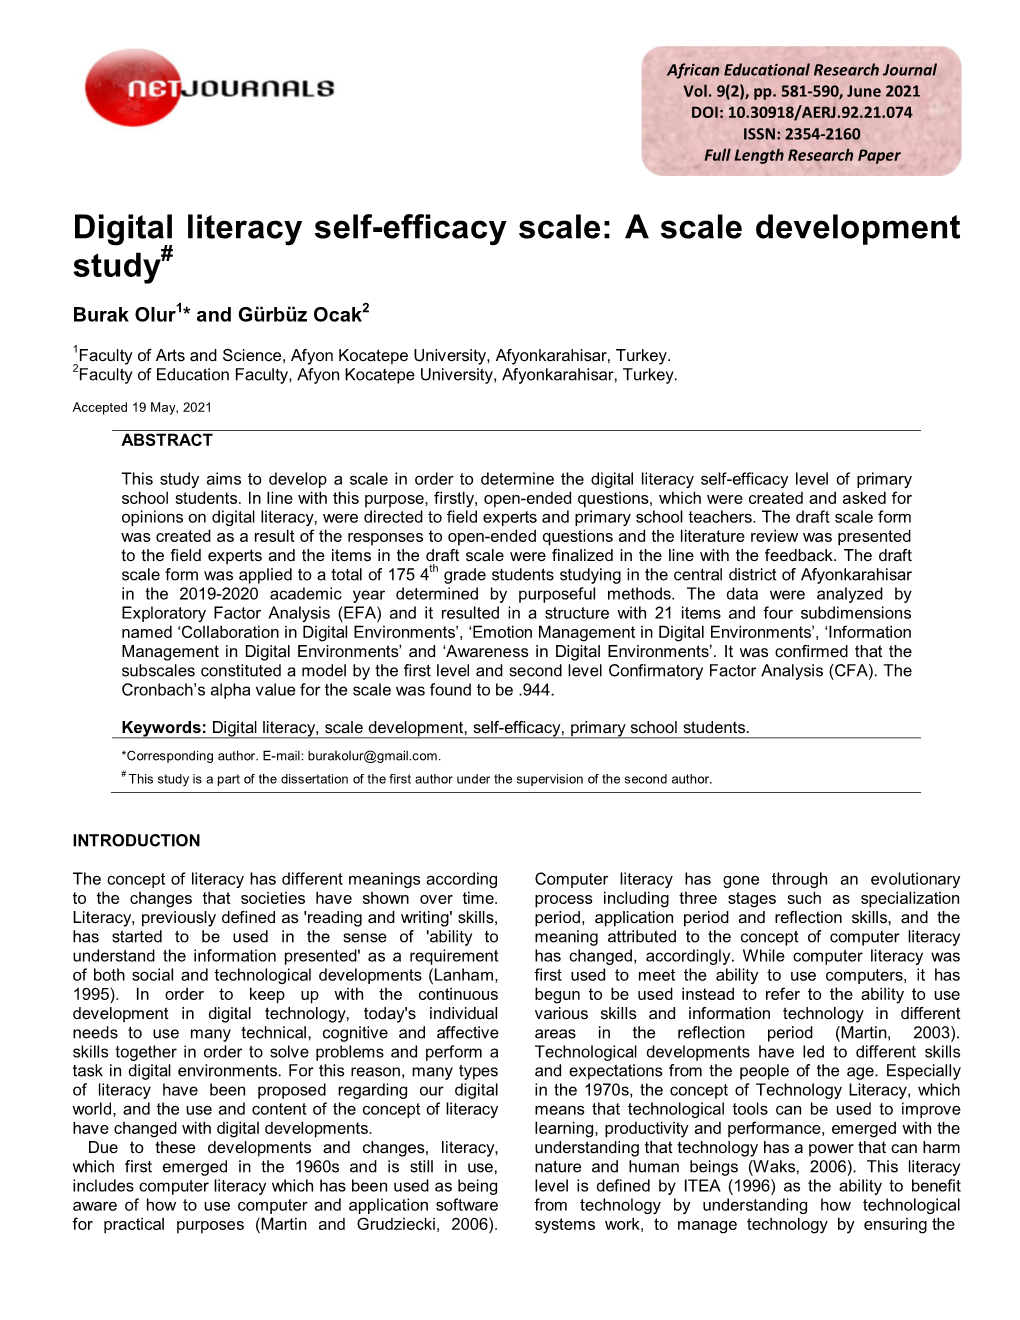 Digital Literacy Self-Efficacy Scale: a Scale Development Study